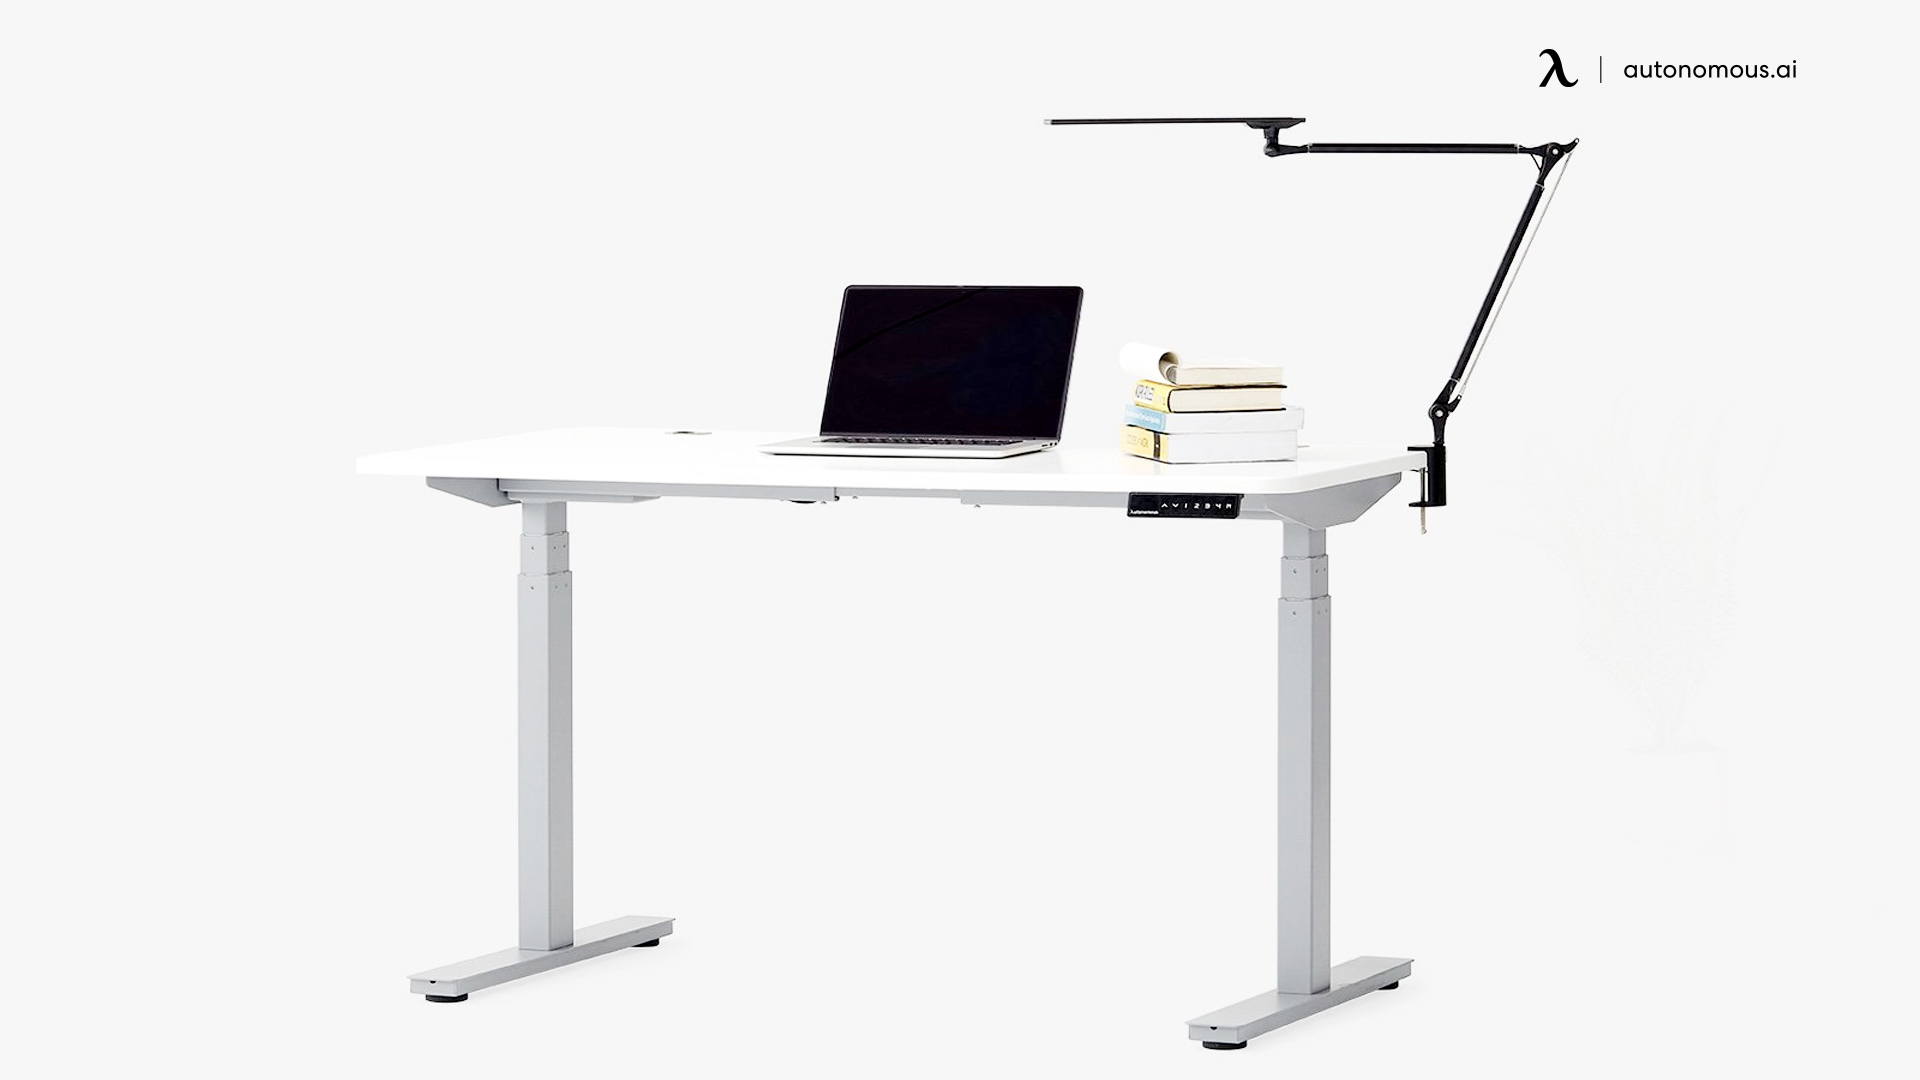 Autonomous light bar for desk